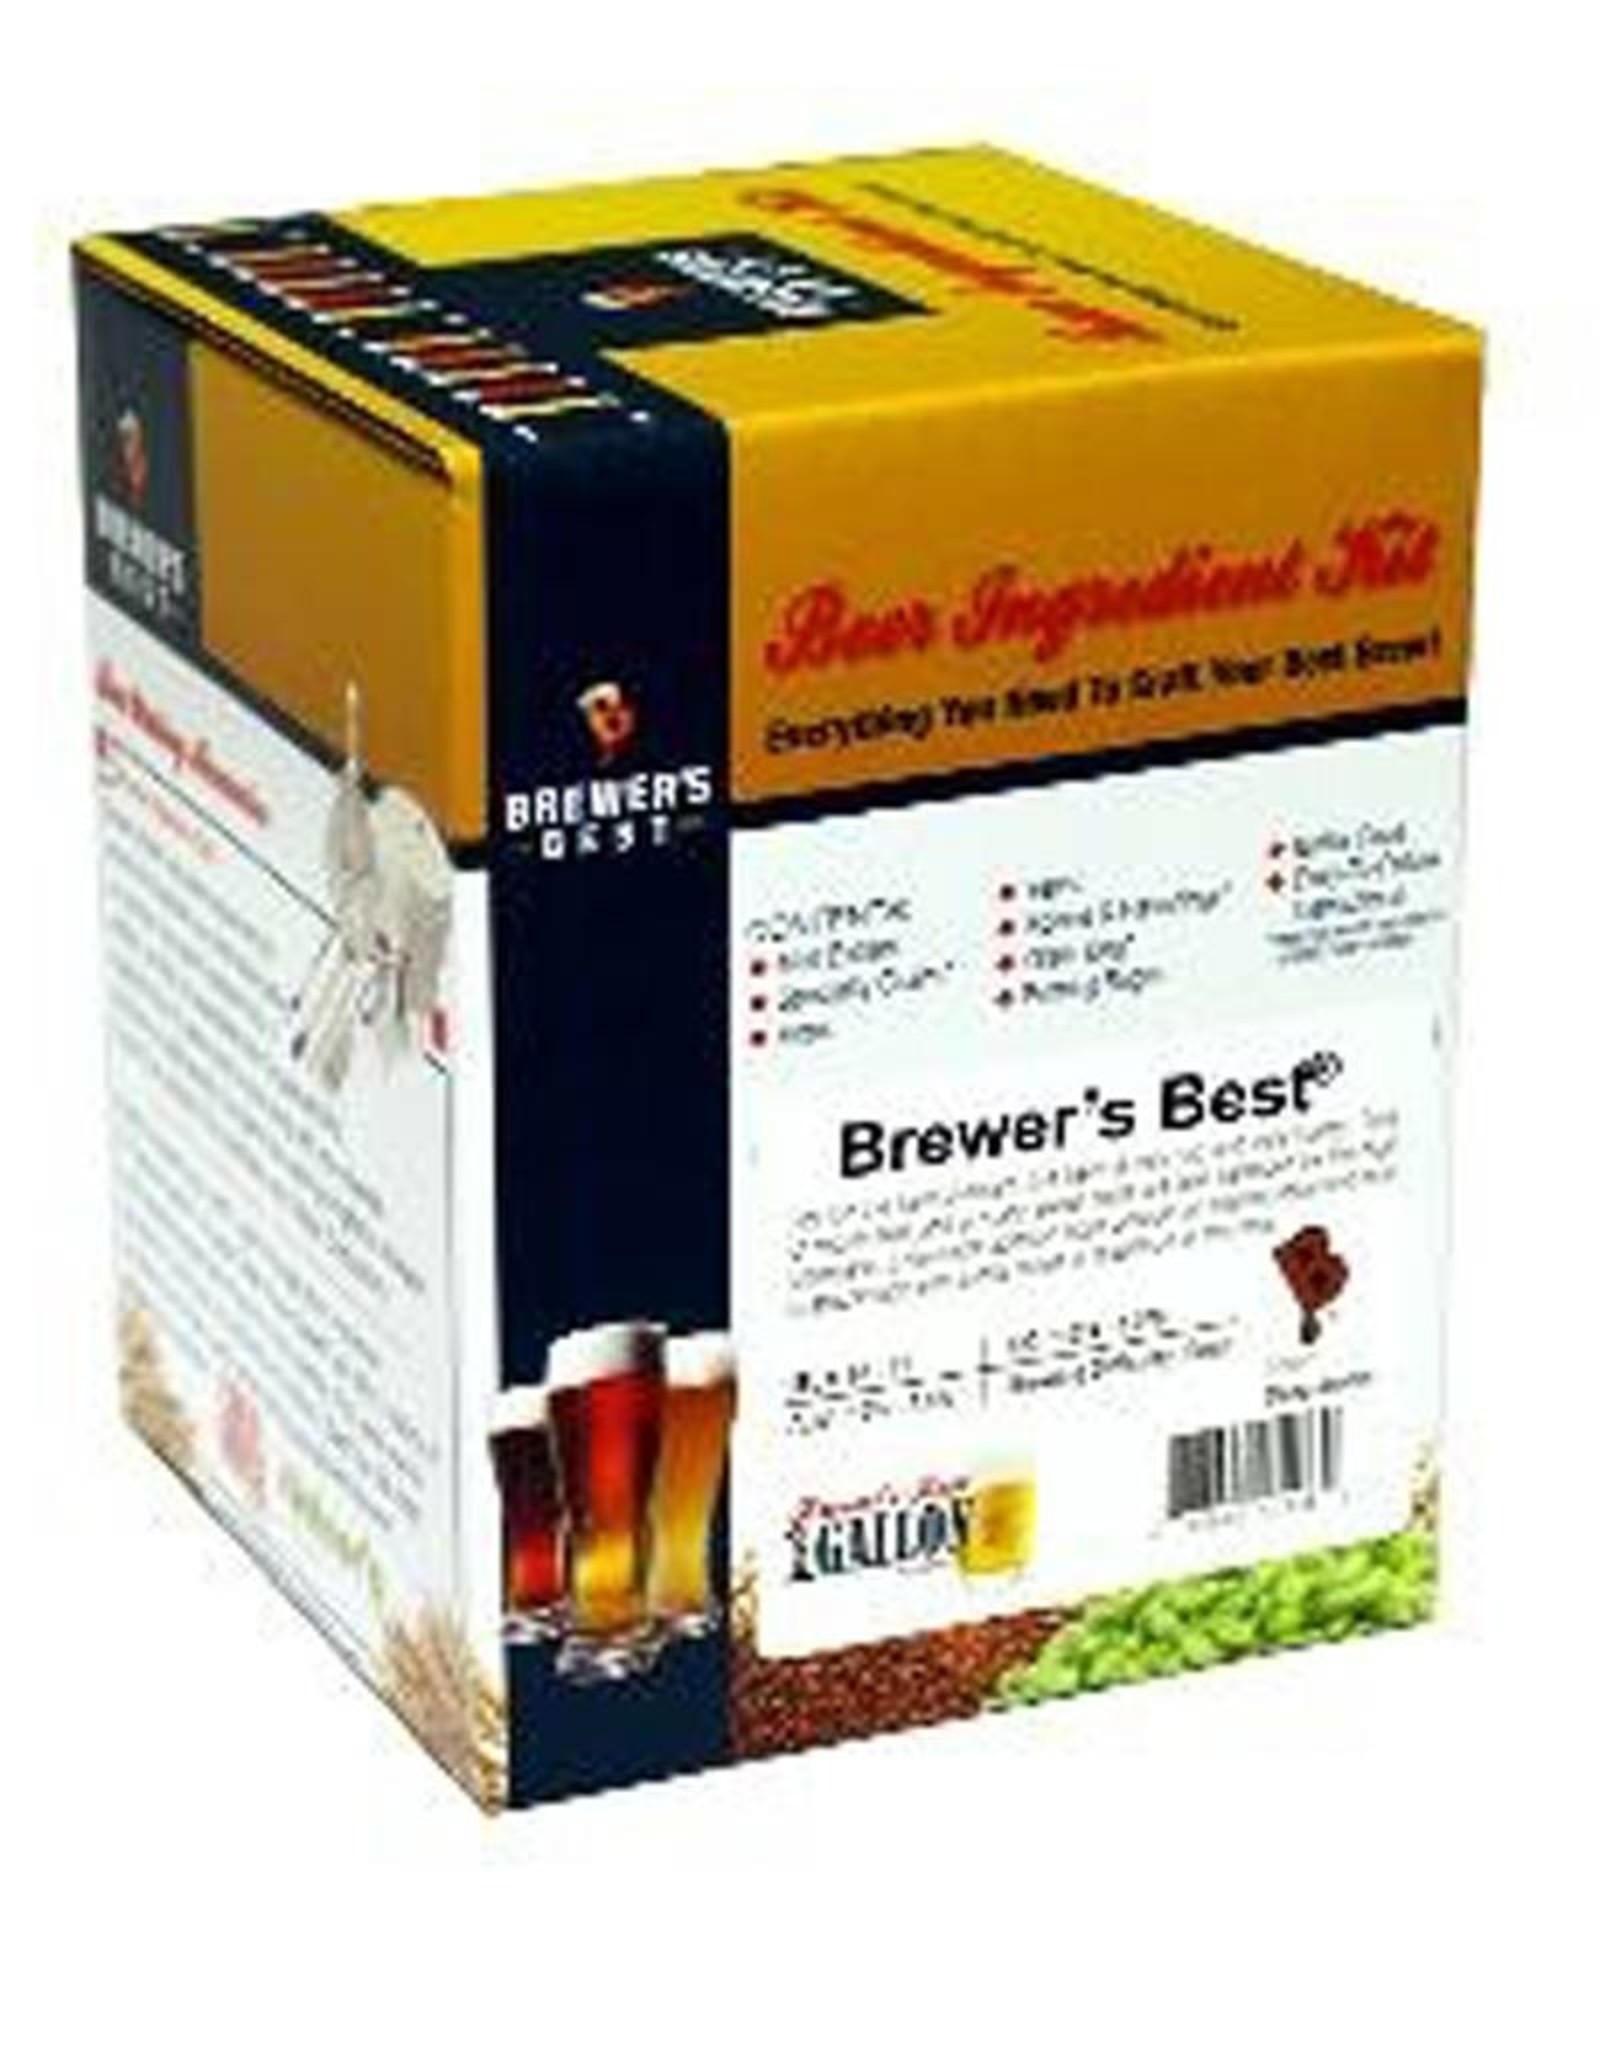 Brewers Best Blackberry Tart Sour 1 gal ingredient kit